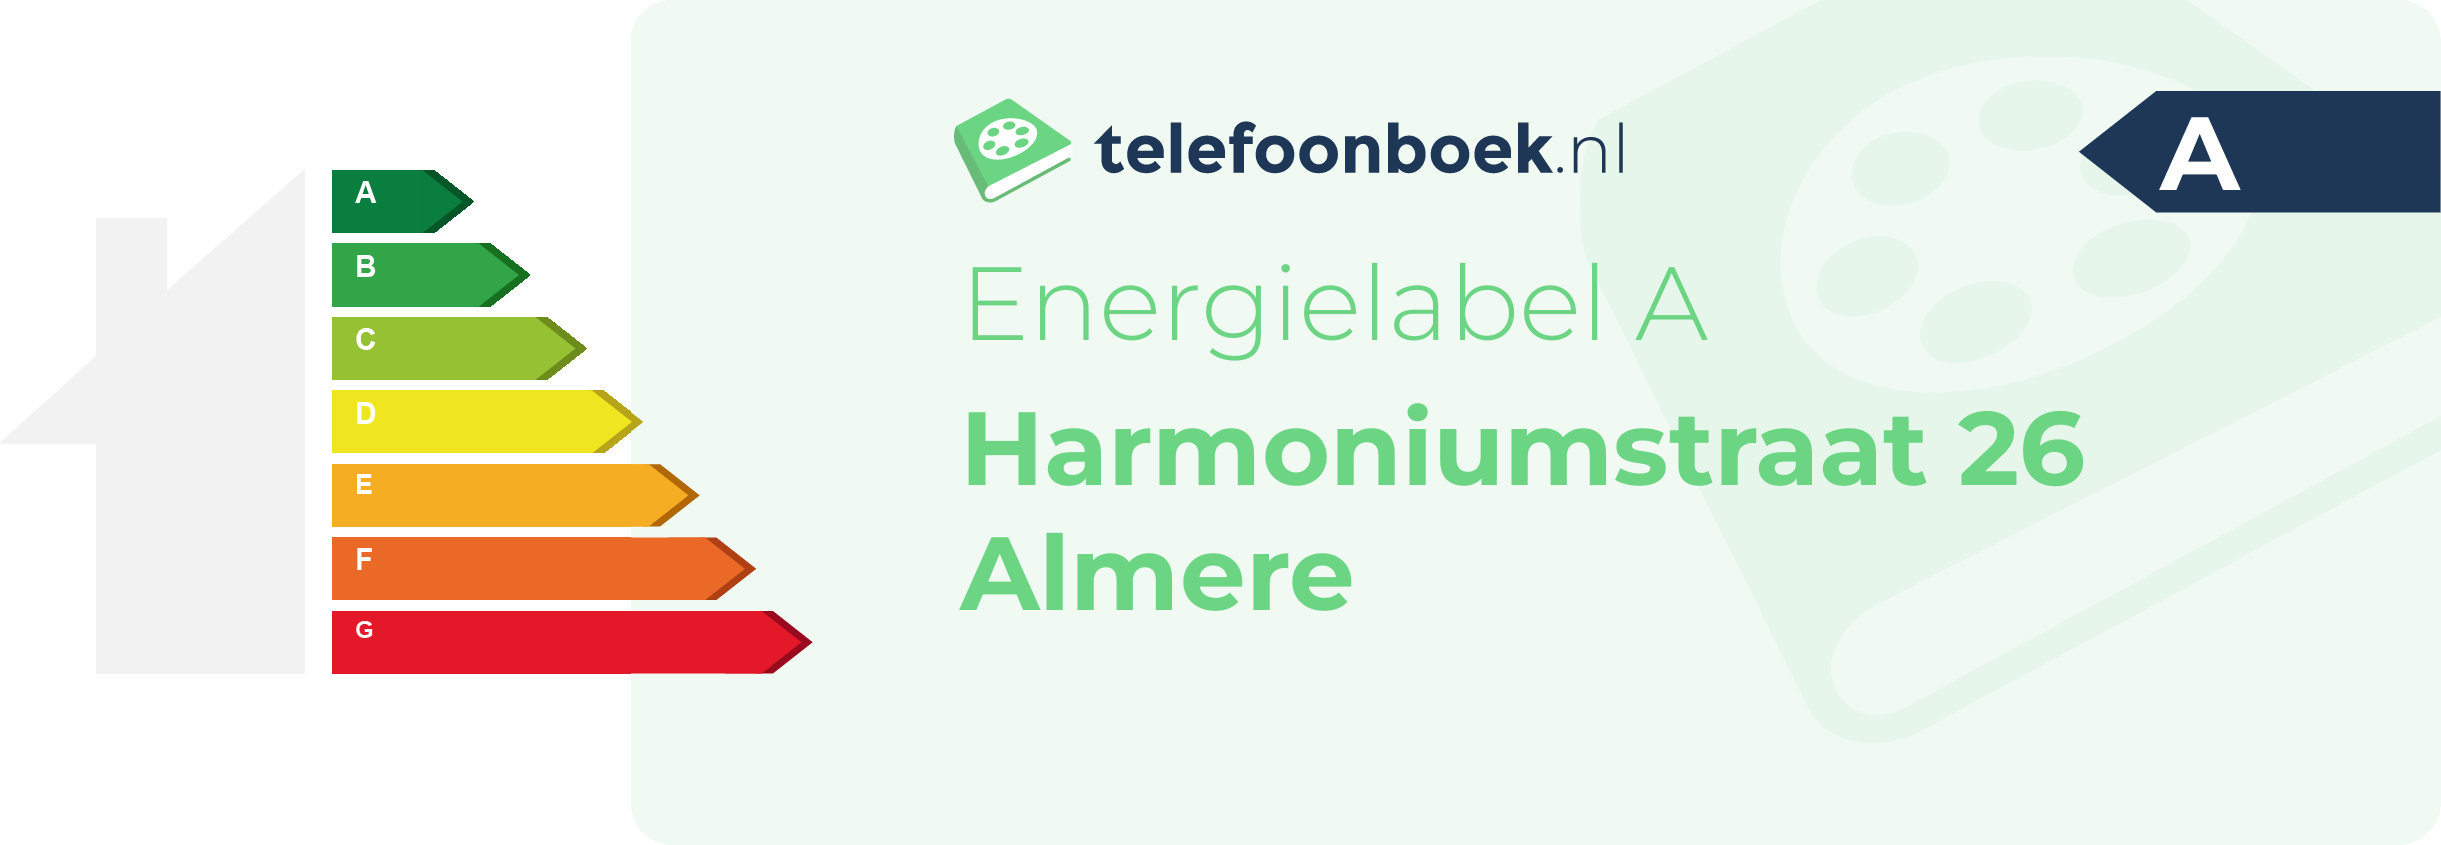 Energielabel Harmoniumstraat 26 Almere